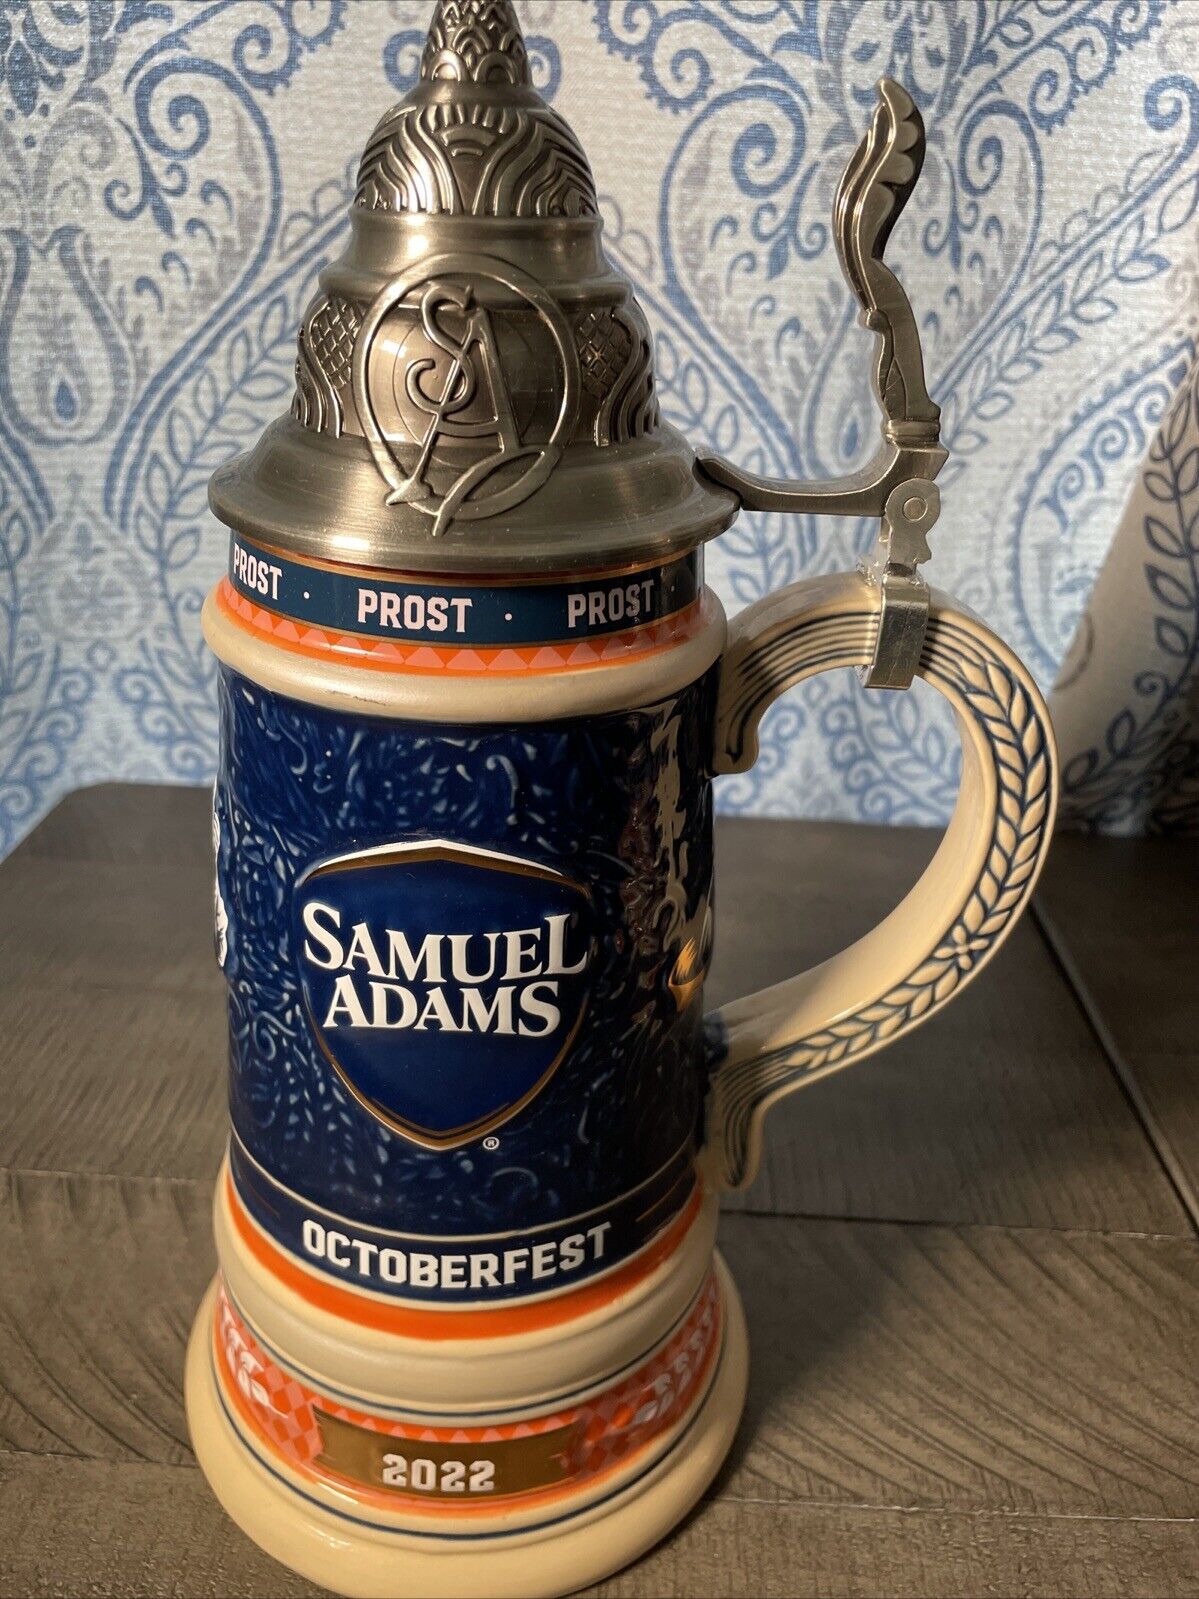 Samuel Sam Adams 2022 Octoberfest Beer Stein Mug Limited Edition #2112 Prost NEW